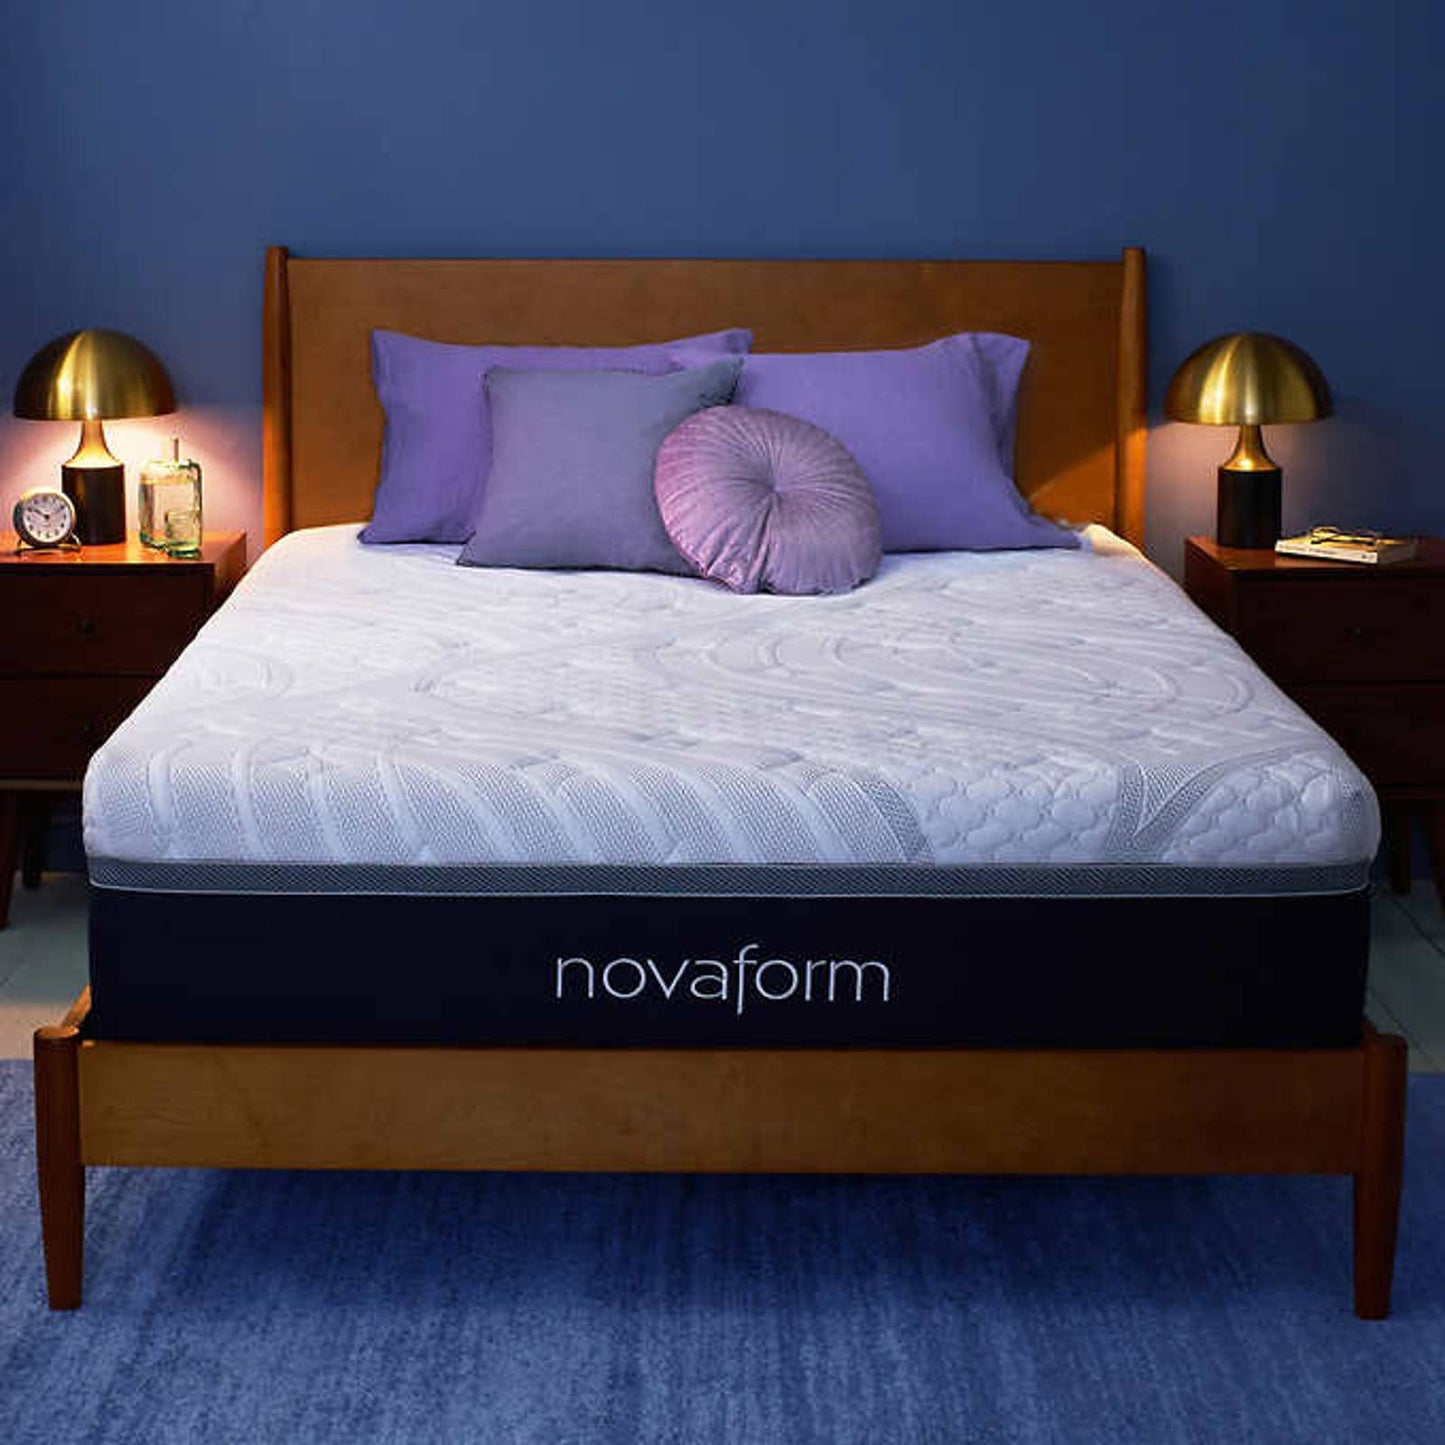 NEW - Costco - Novaform KING 14" ComfortGrande Plus Gel Memory Foam Mattress Medium - Retail $399